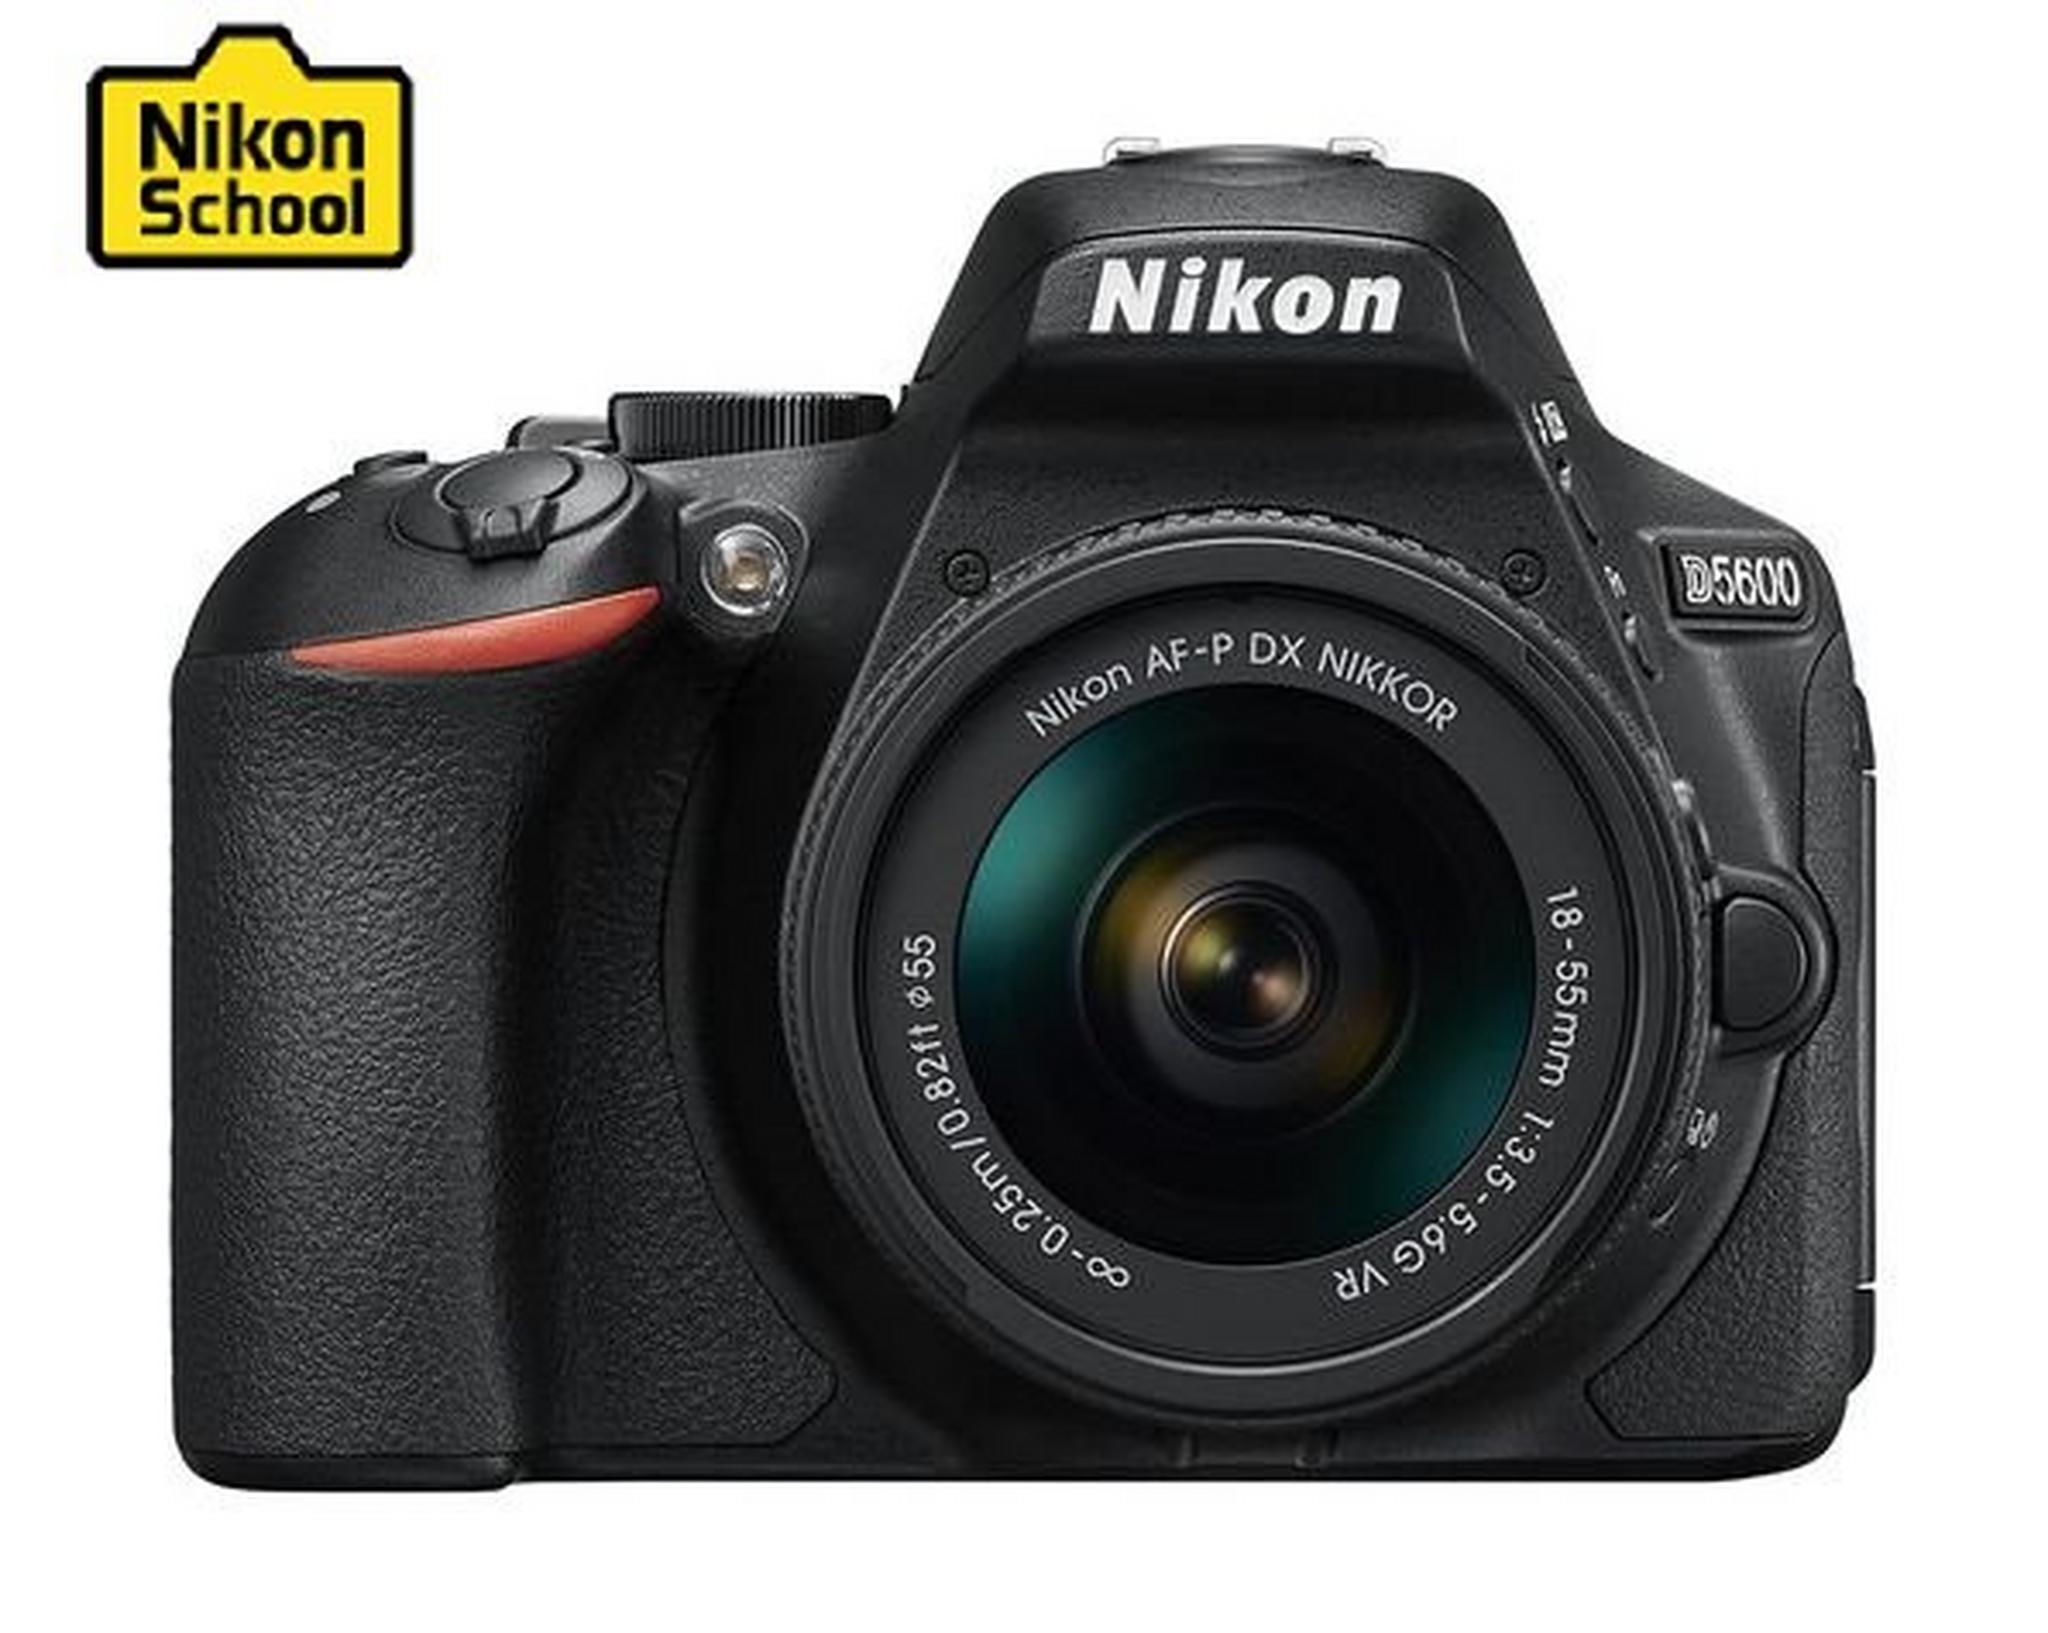 Nikon D5600 DSLR Camera 24.2MP Wifi With DX 18-55mm f/3.5-5.6G VR Lens - Black